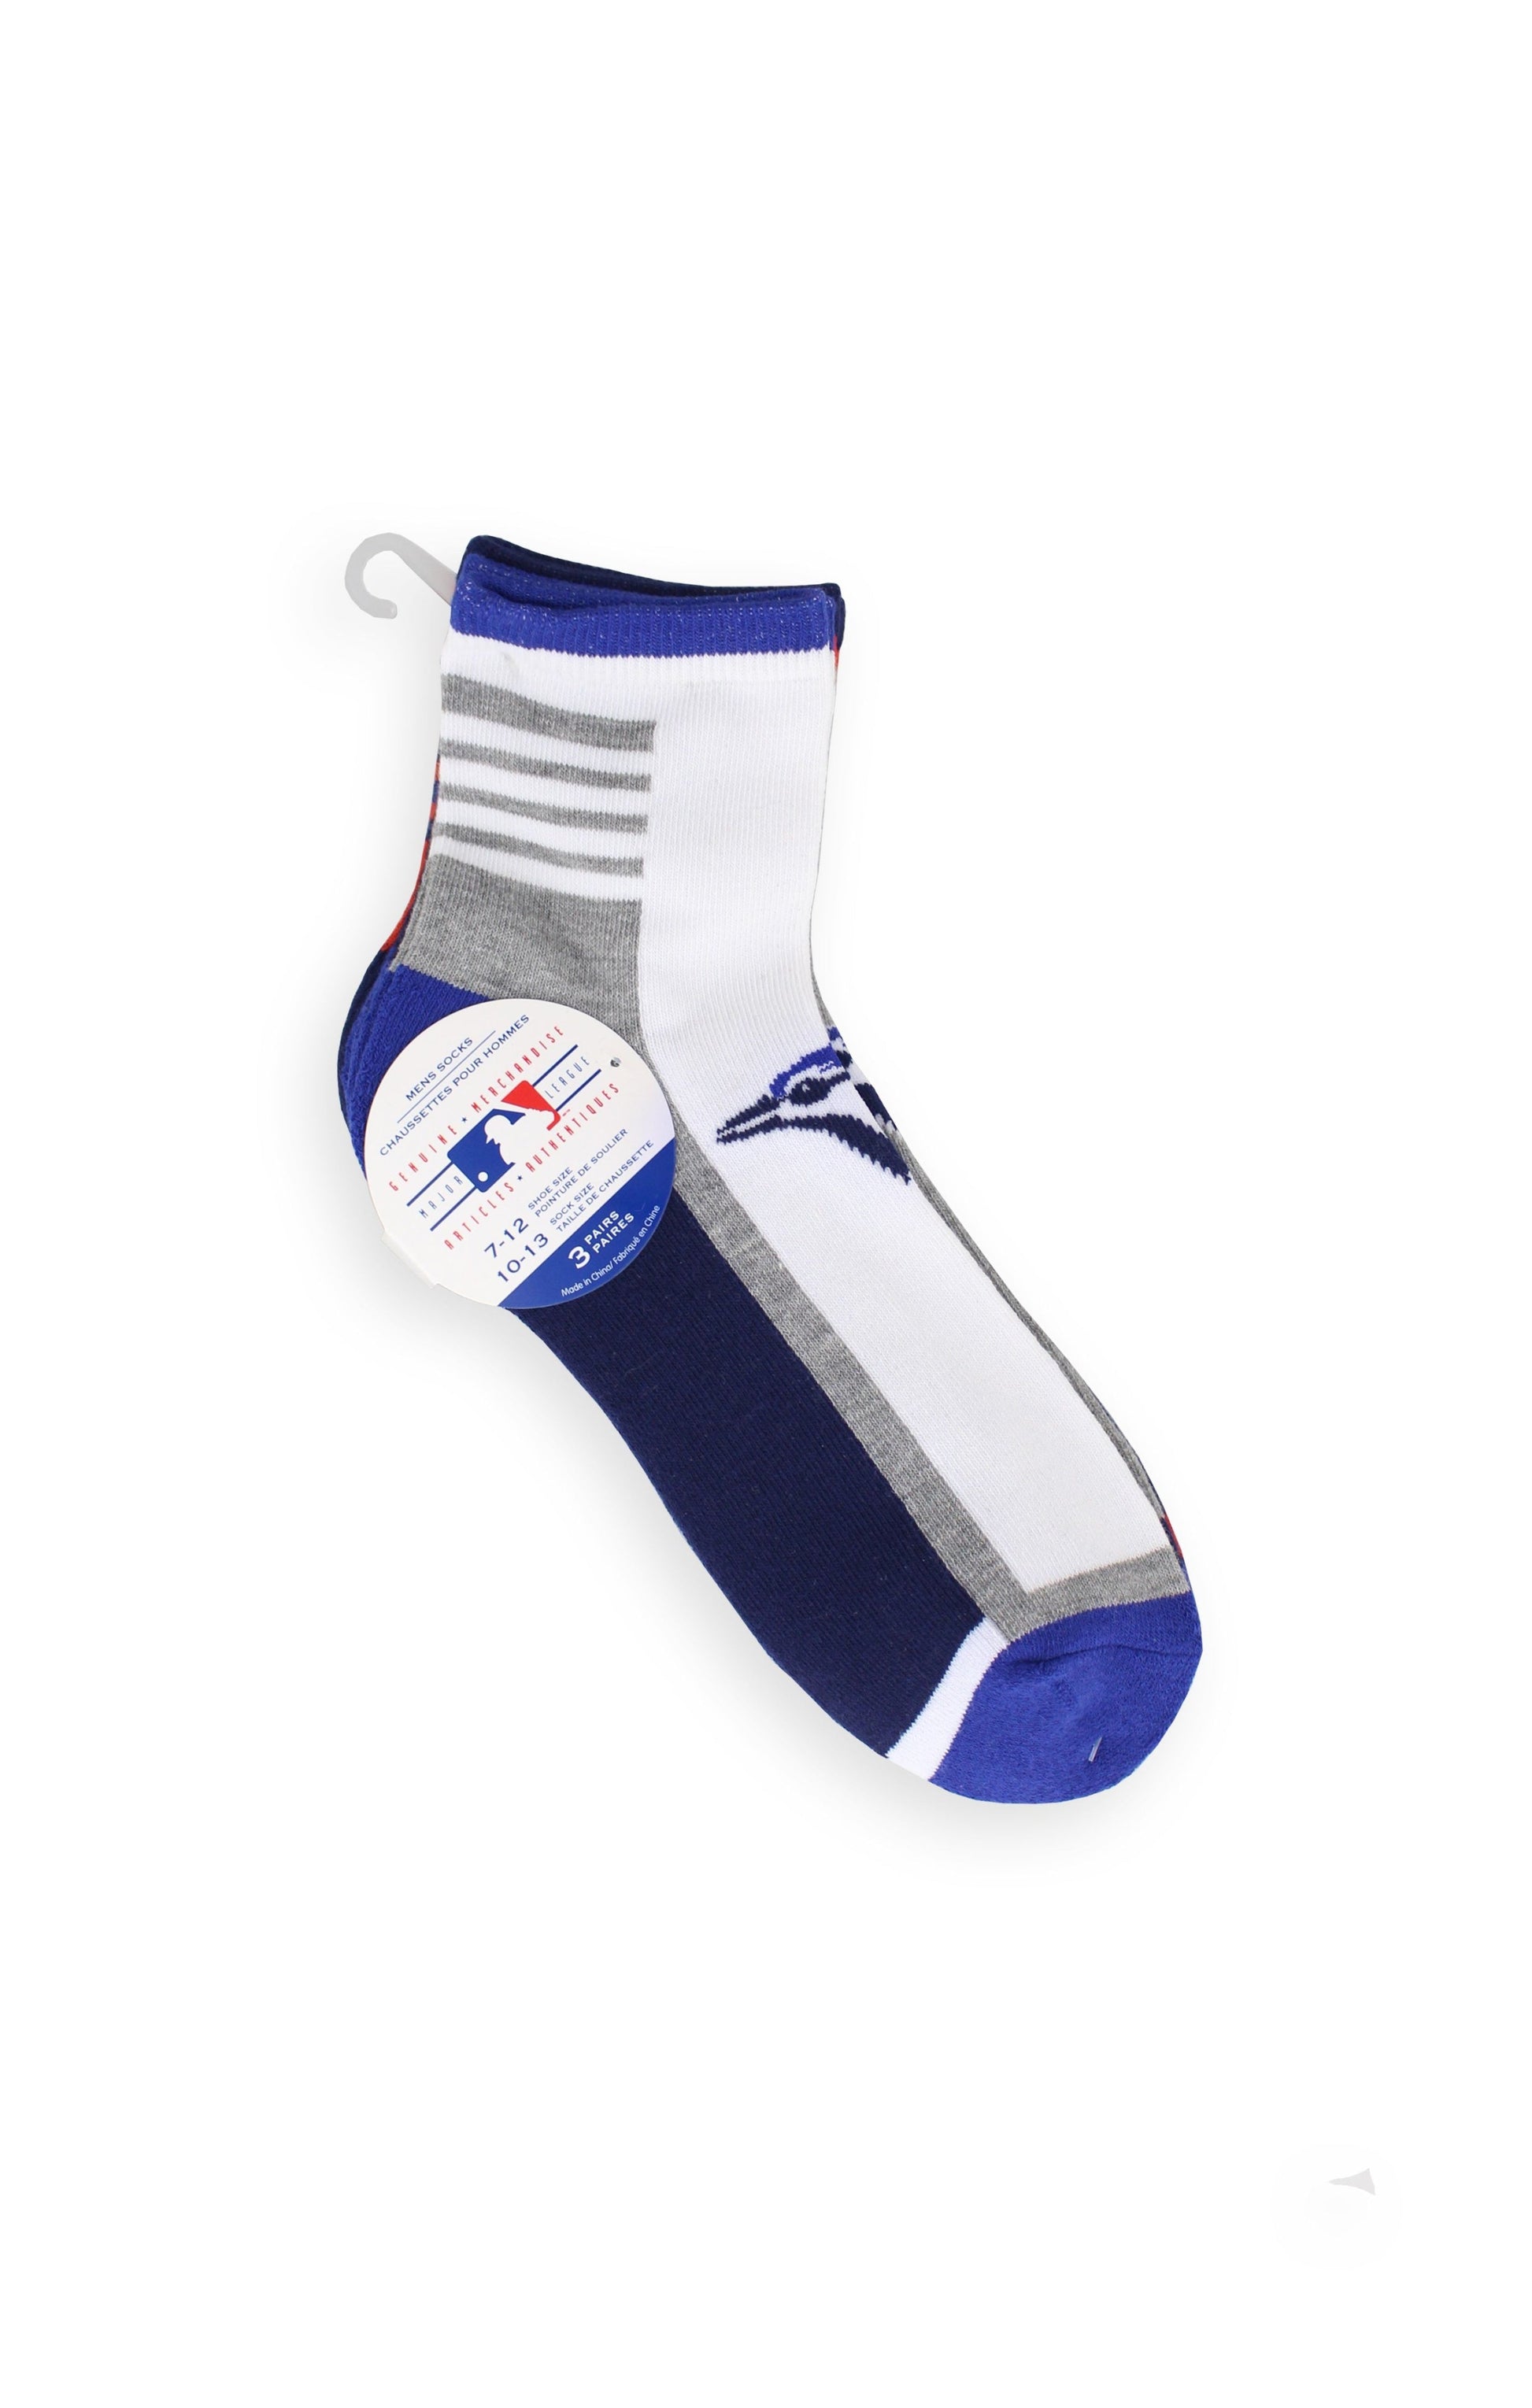 Gertex Toronto Blue Jays Socks Quarter Length 3 Pack Mens Shoe Size 7-14